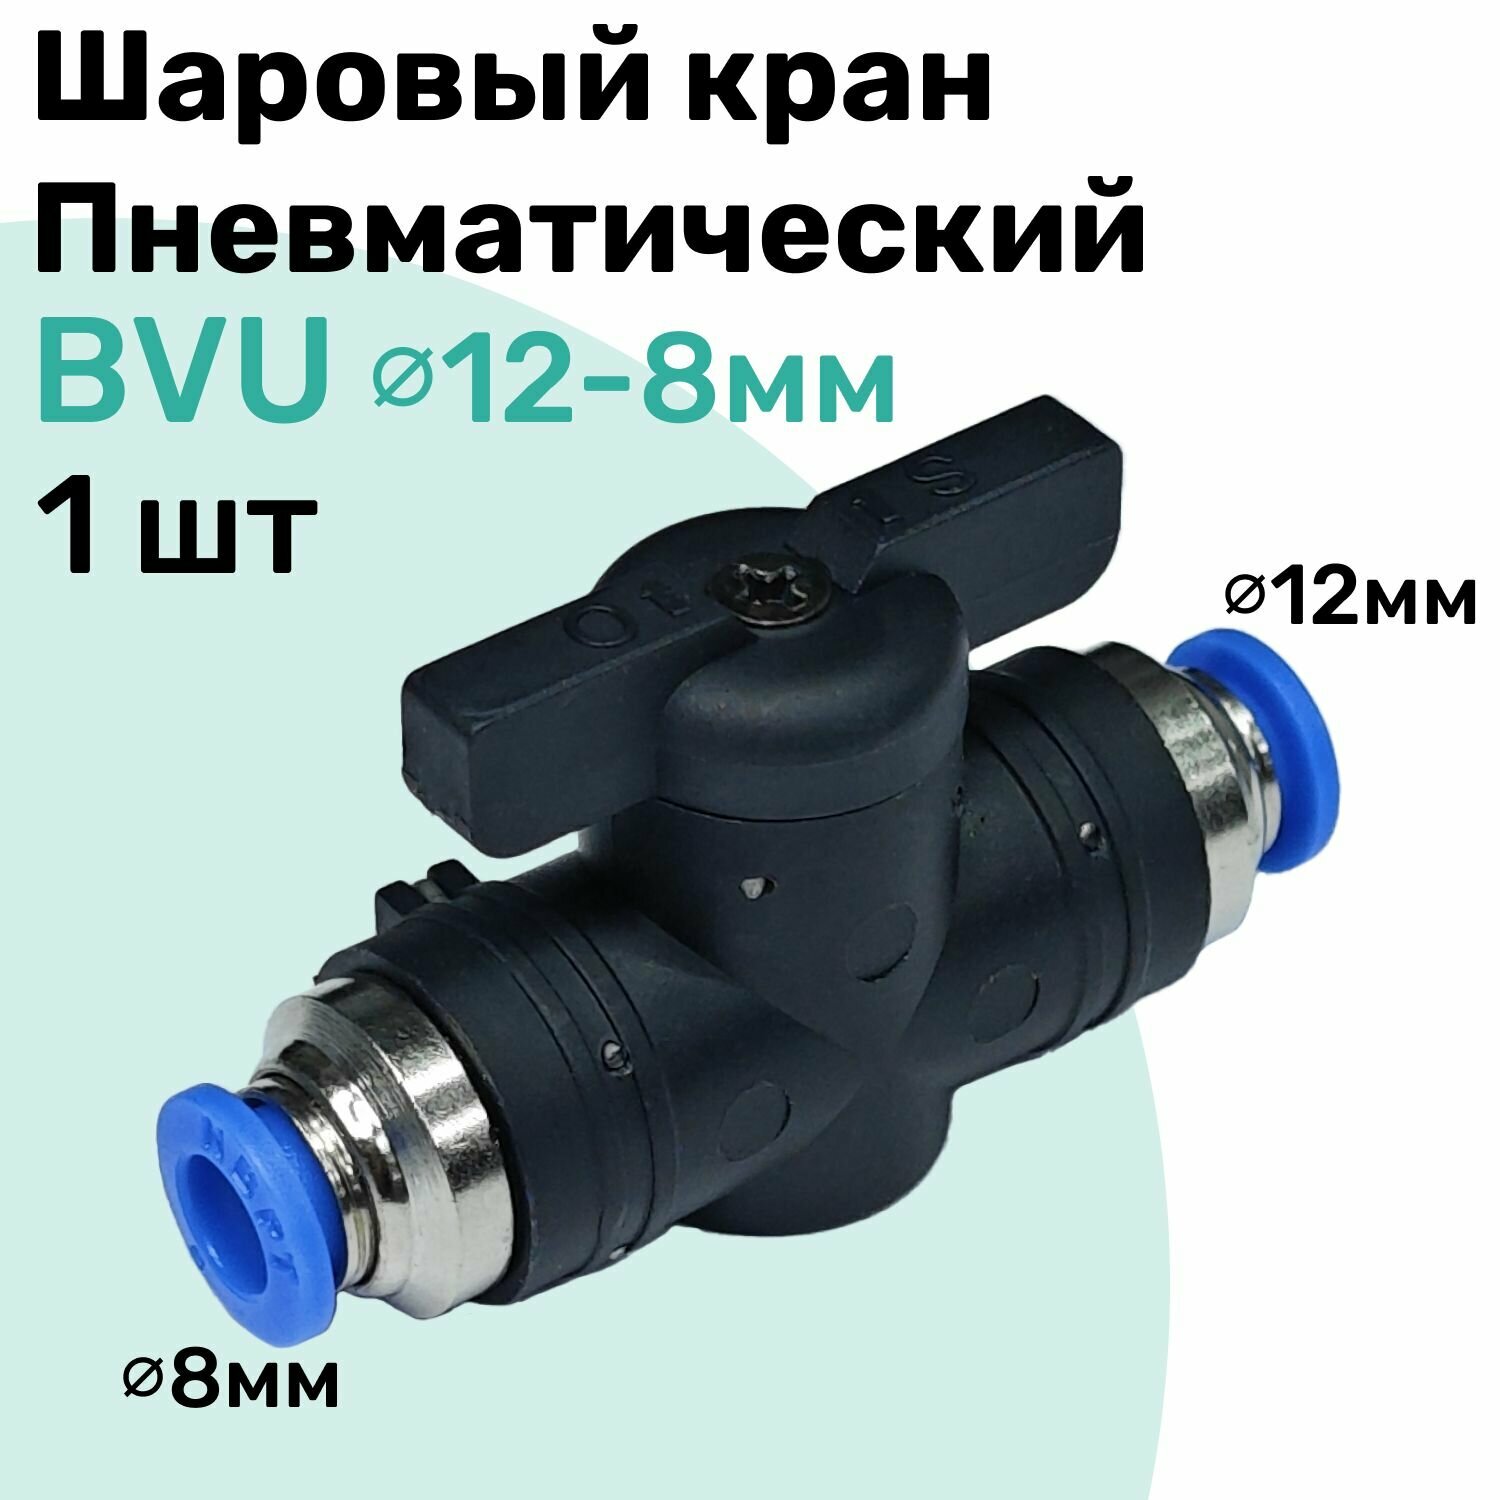 Шаровый кран пневматический BVU 12-8 мм, Пневмофитинг NBPT